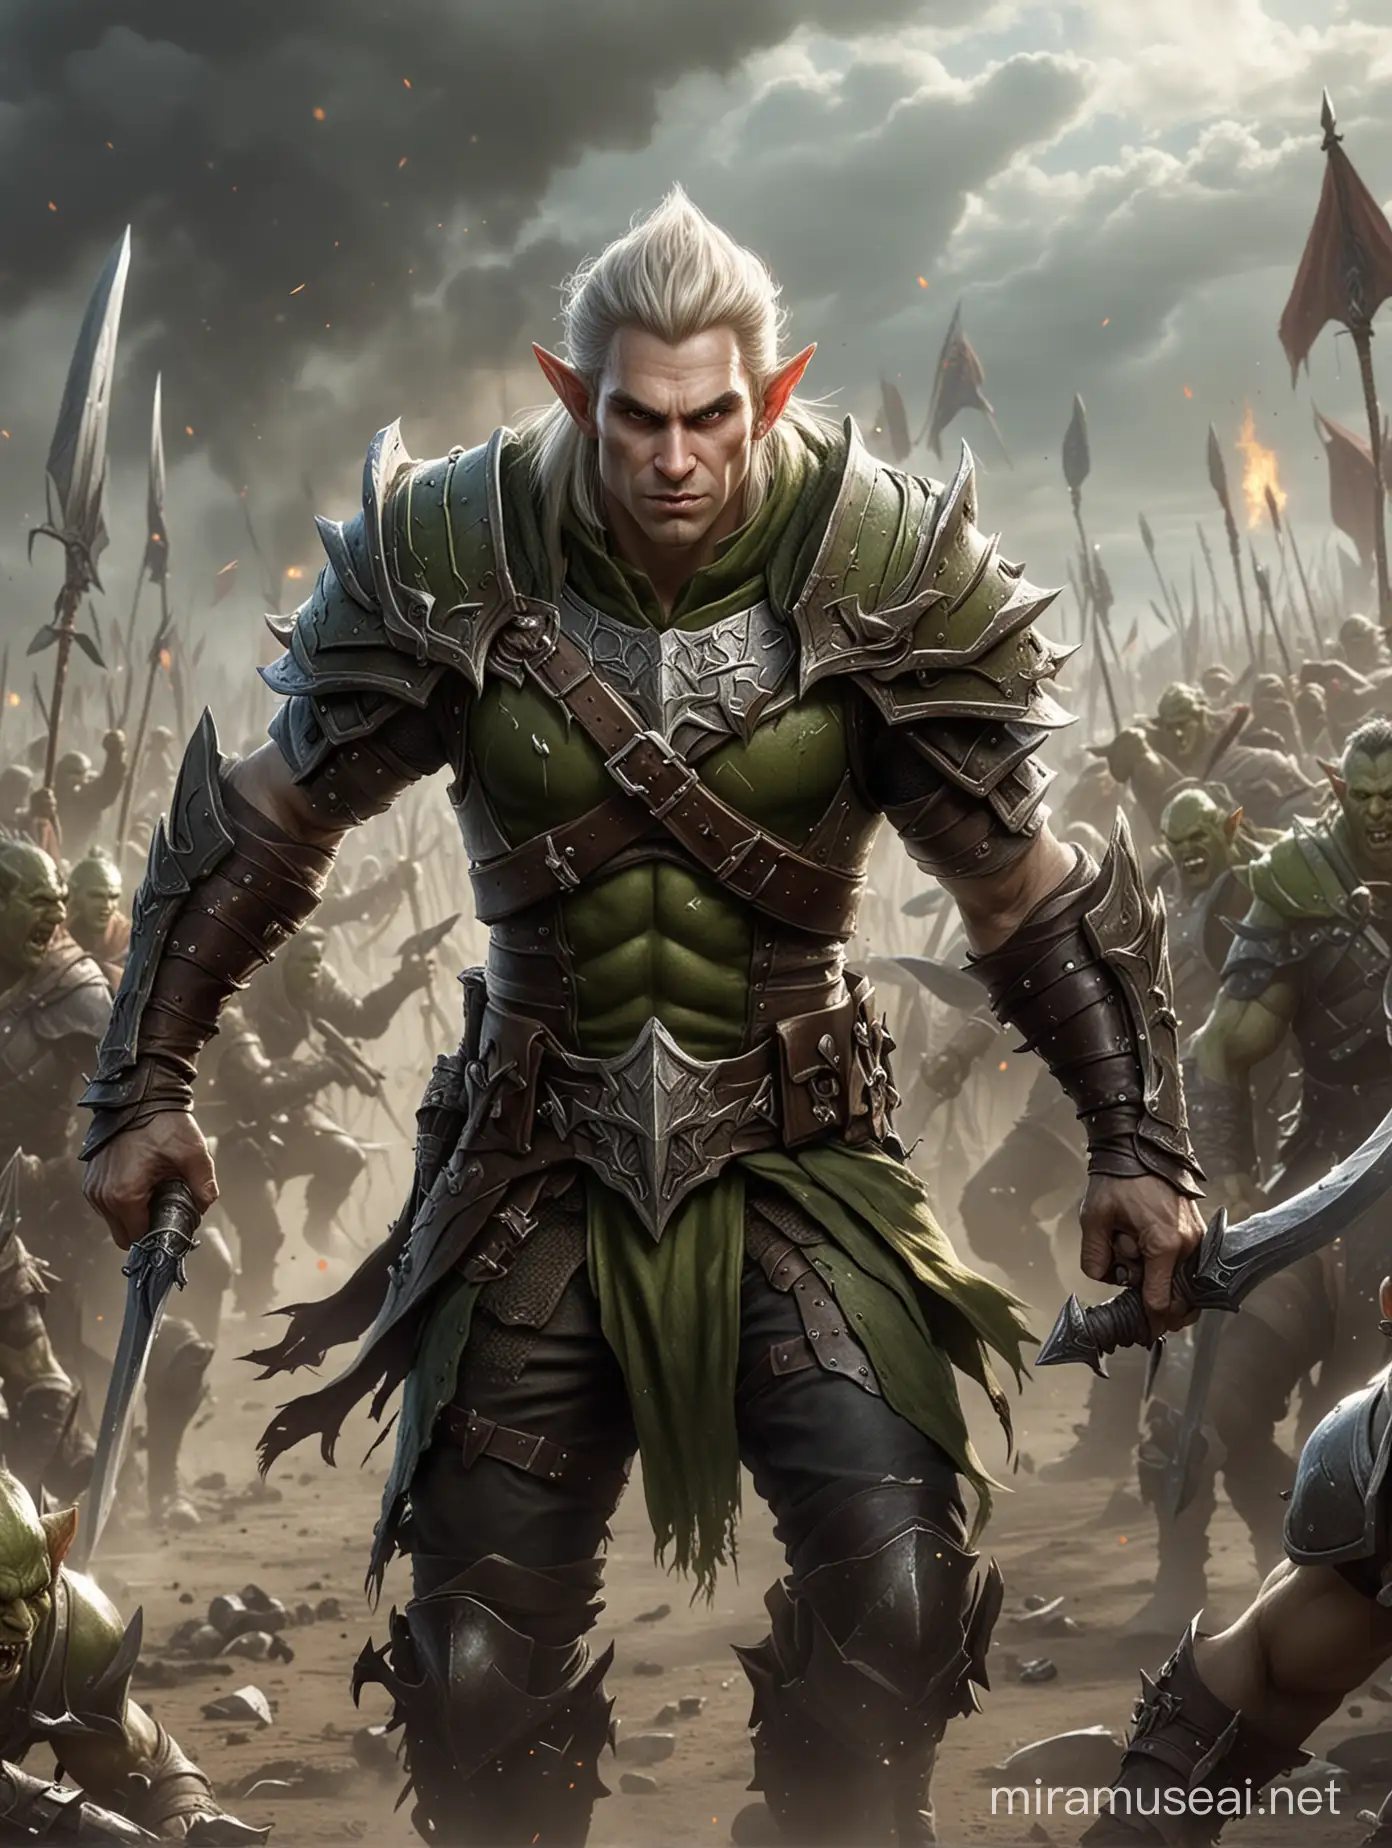 Dashing Elf Warrior in Battle Against Orc Horde